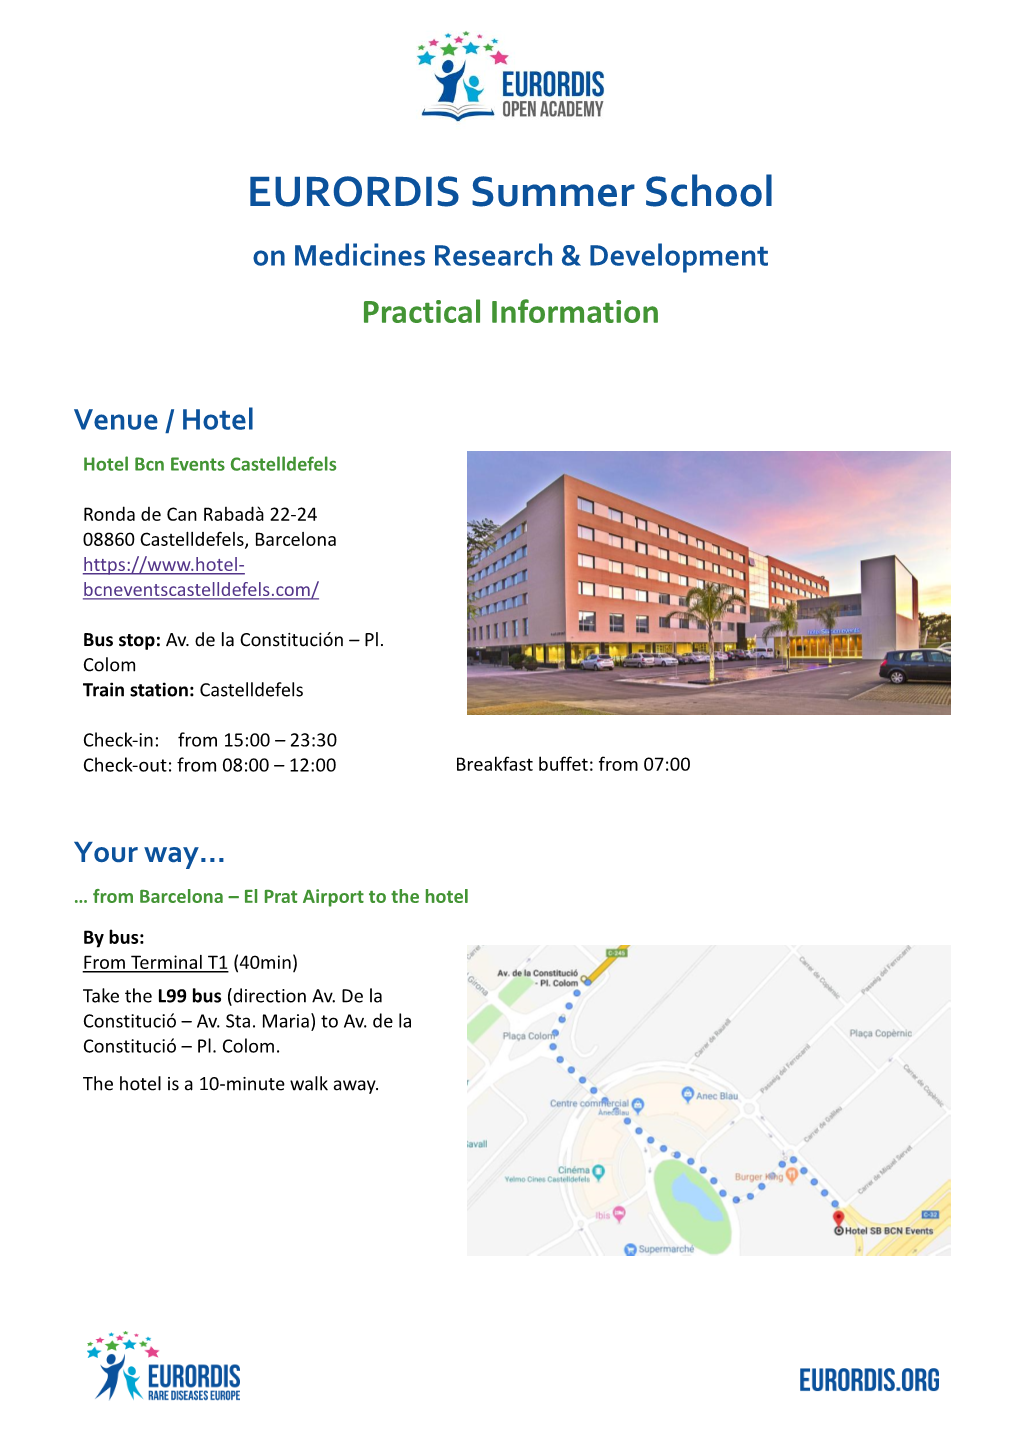 EURORDIS Summer School on Medicines Research & Development Practical Information